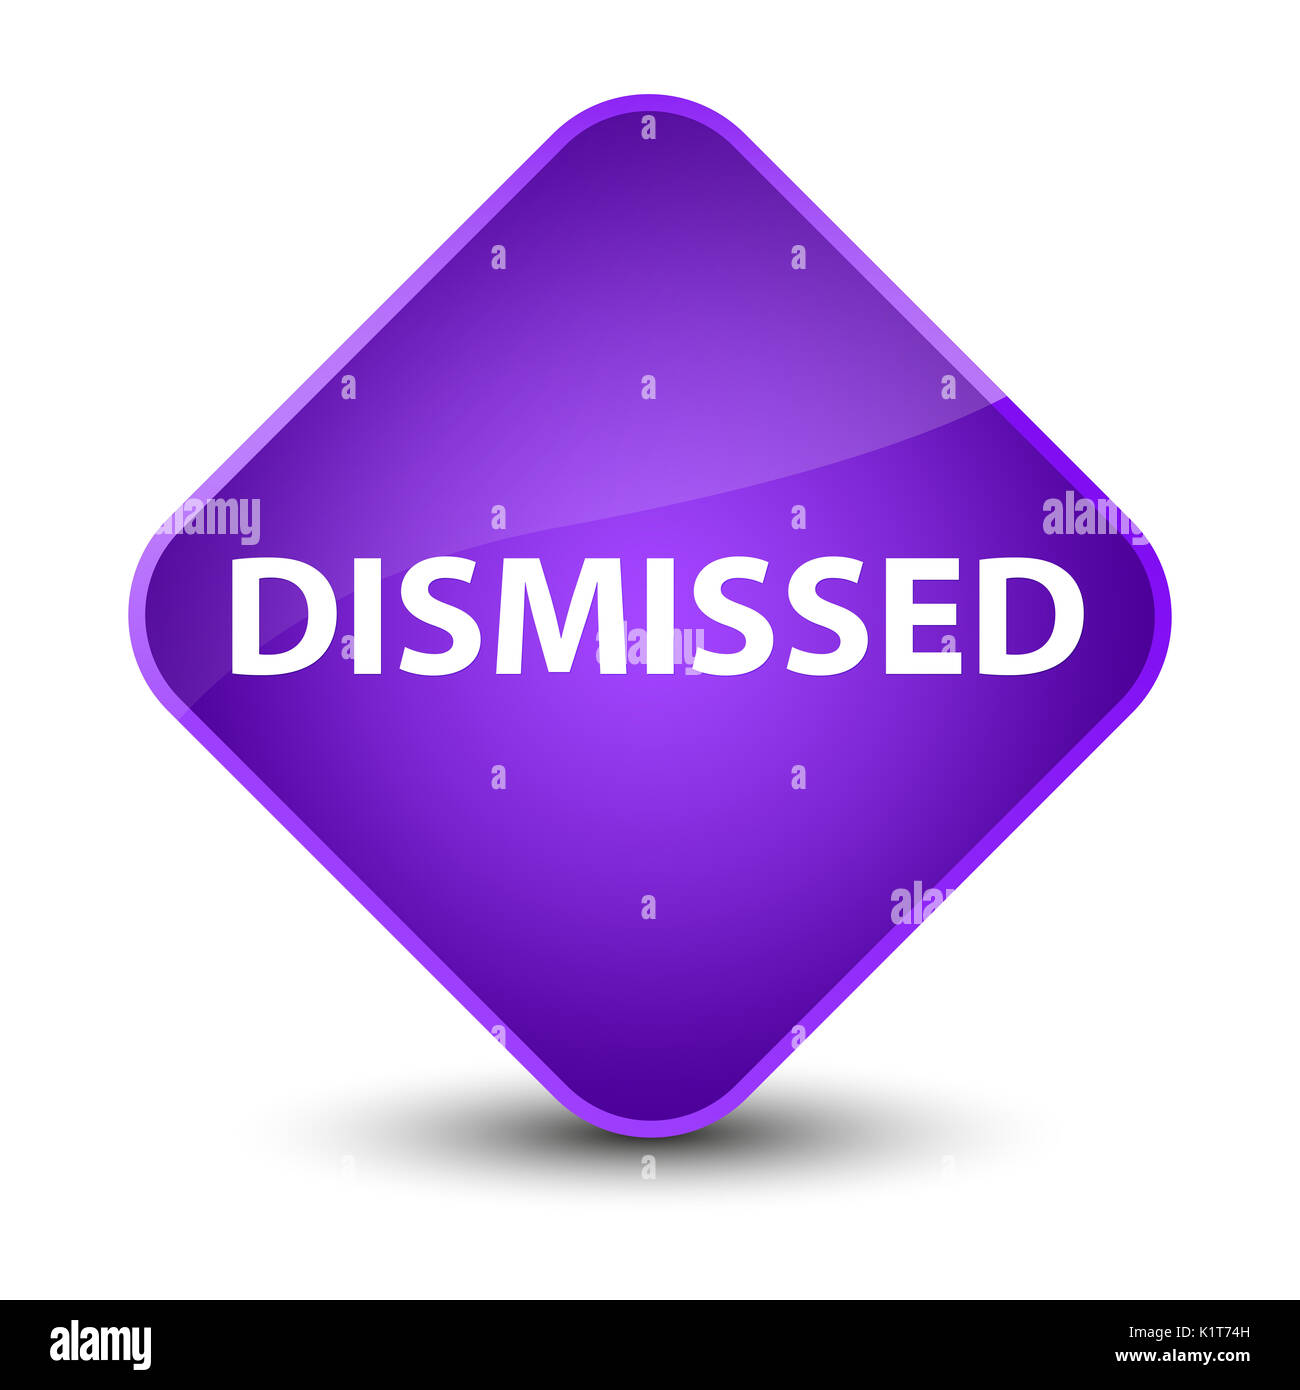 Dismissed isolated on elegant purple diamond button abstract illustration Stock Photo